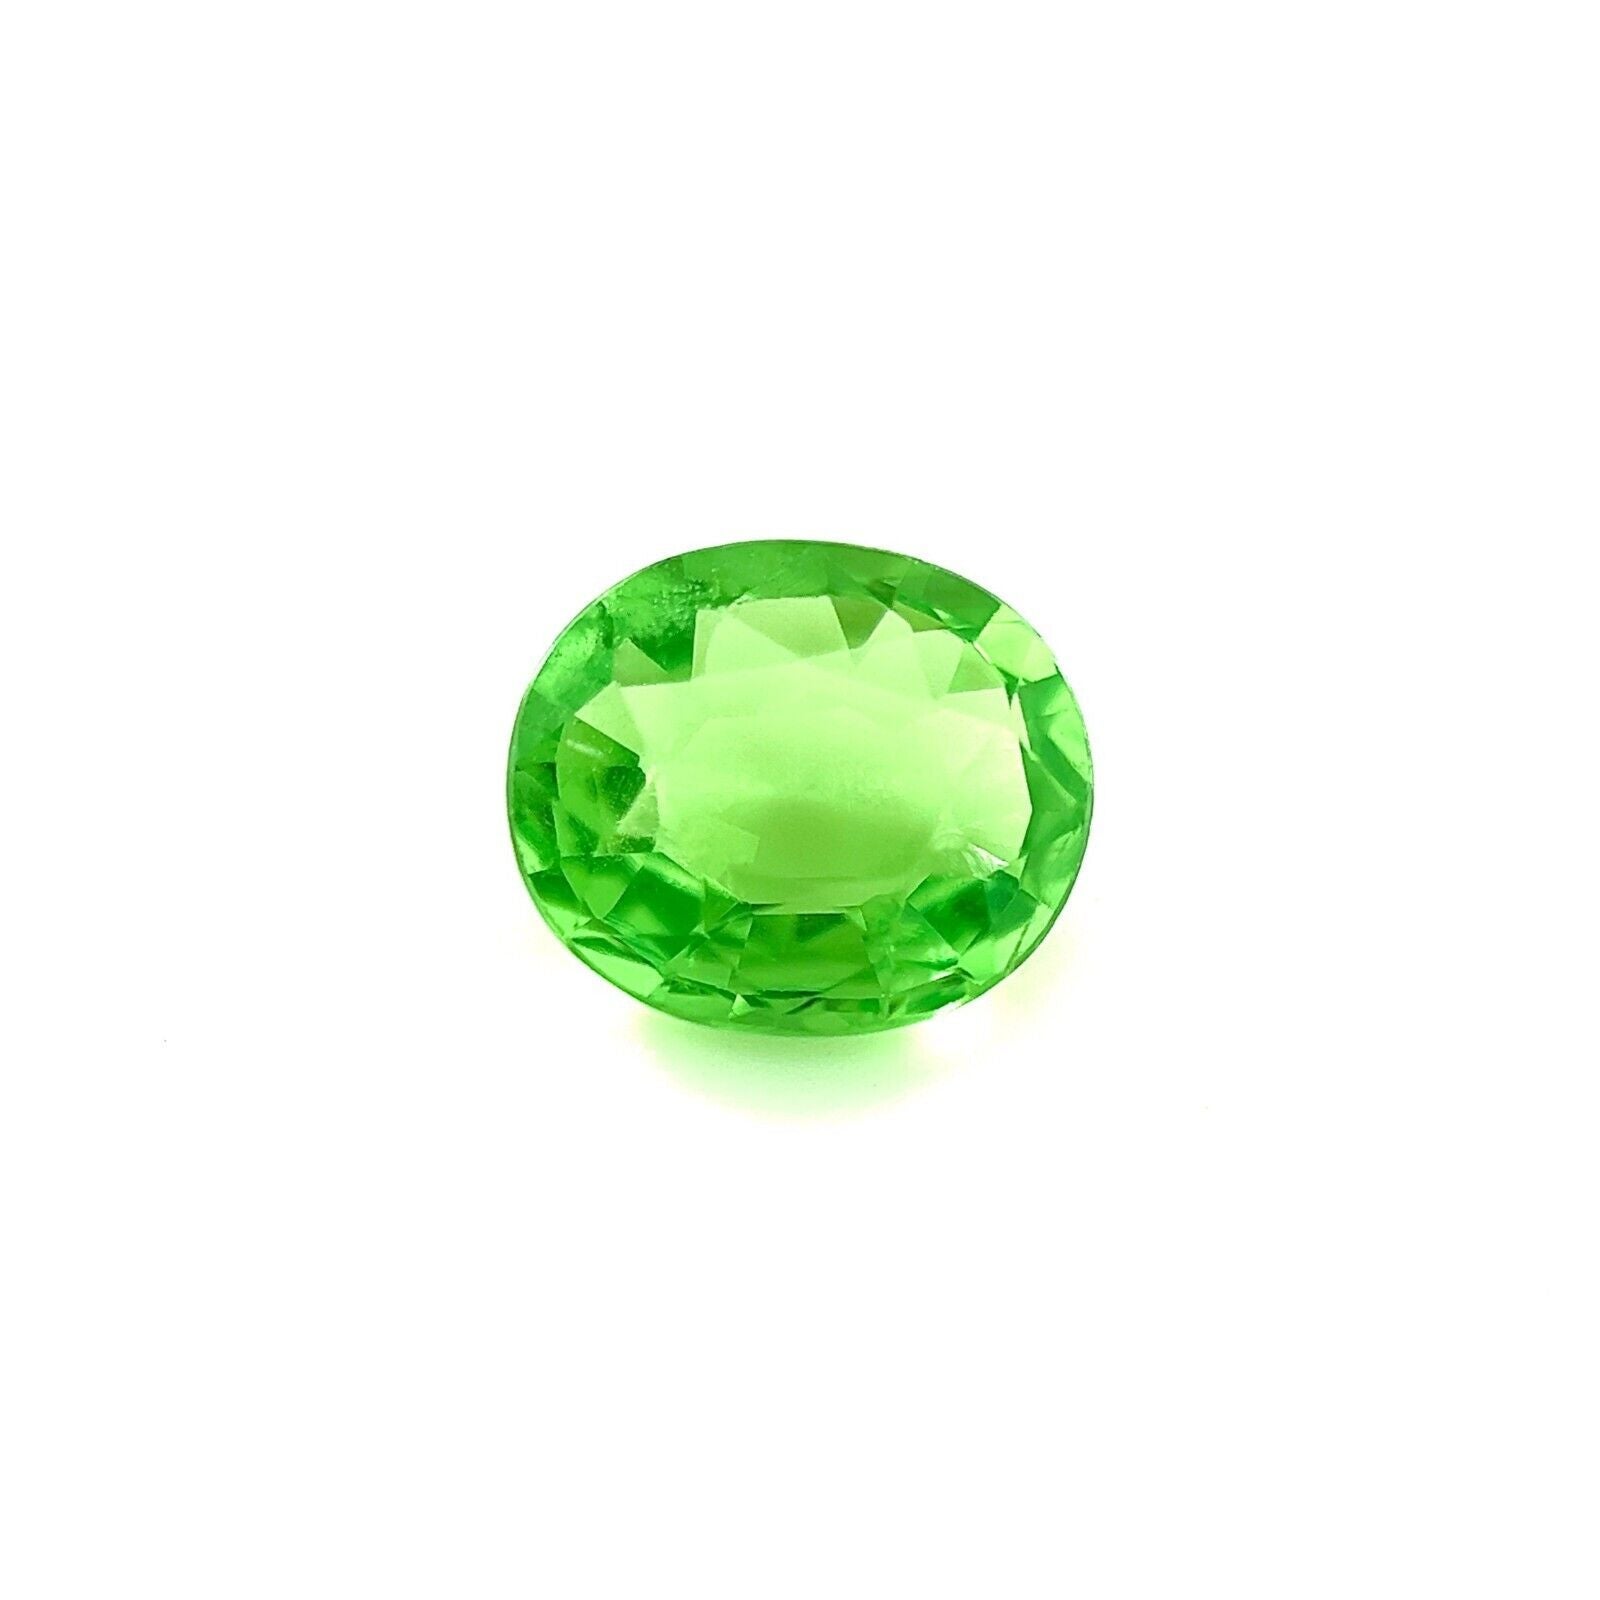 1.33ct Vivid Green Vivid Tsavorite Garnet Oval Cut Loose Gemstone For Sale